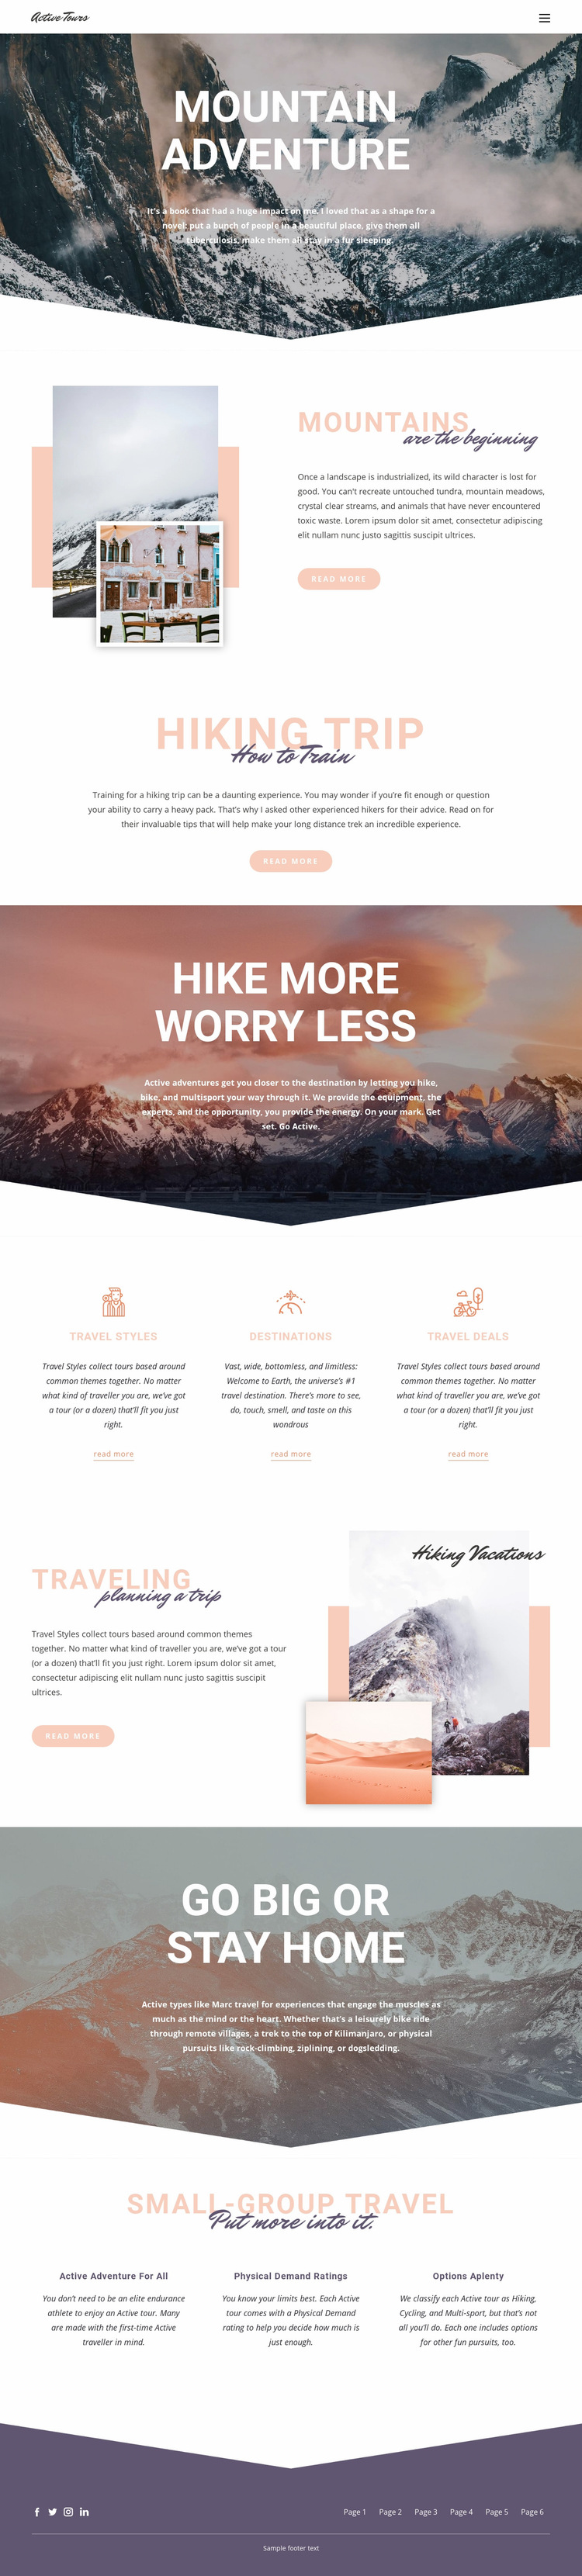 Mountain Adventure Web Page Design